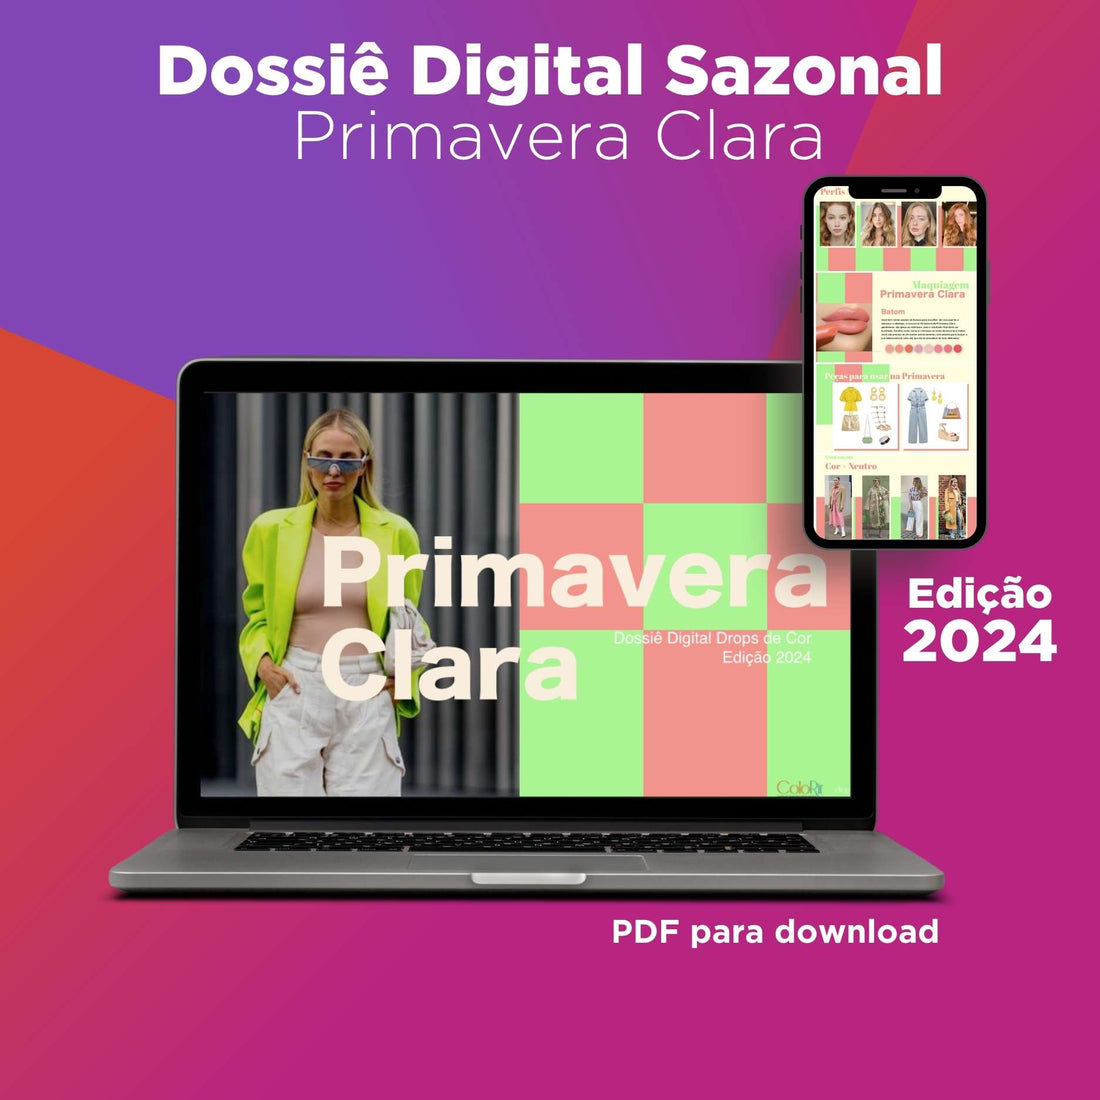 Digital Seasonal Dossier - Primavera Clara - 2024 Edition